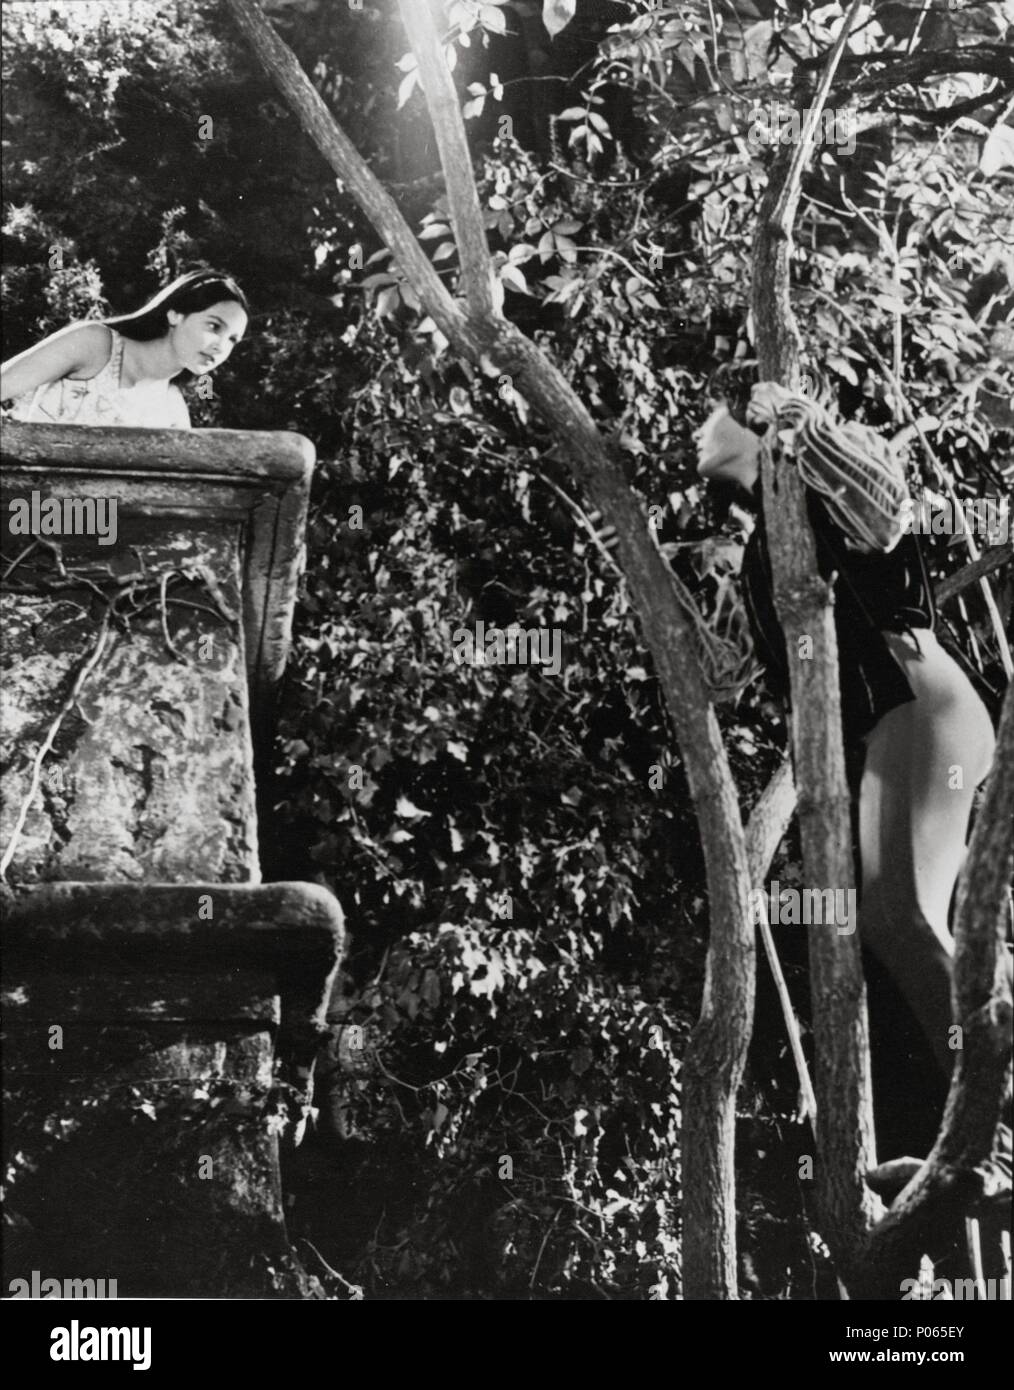 Original Film Title: ROMEO AND JULIET.  English Title: ROMEO AND JULIET.  Film Director: FRANCO ZEFFIRELLI.  Year: 1968.  Stars: OLIVIA HUSSEY; LEONARD WHITING. Credit: PARAMOUNT PICTURES / Album Stock Photo